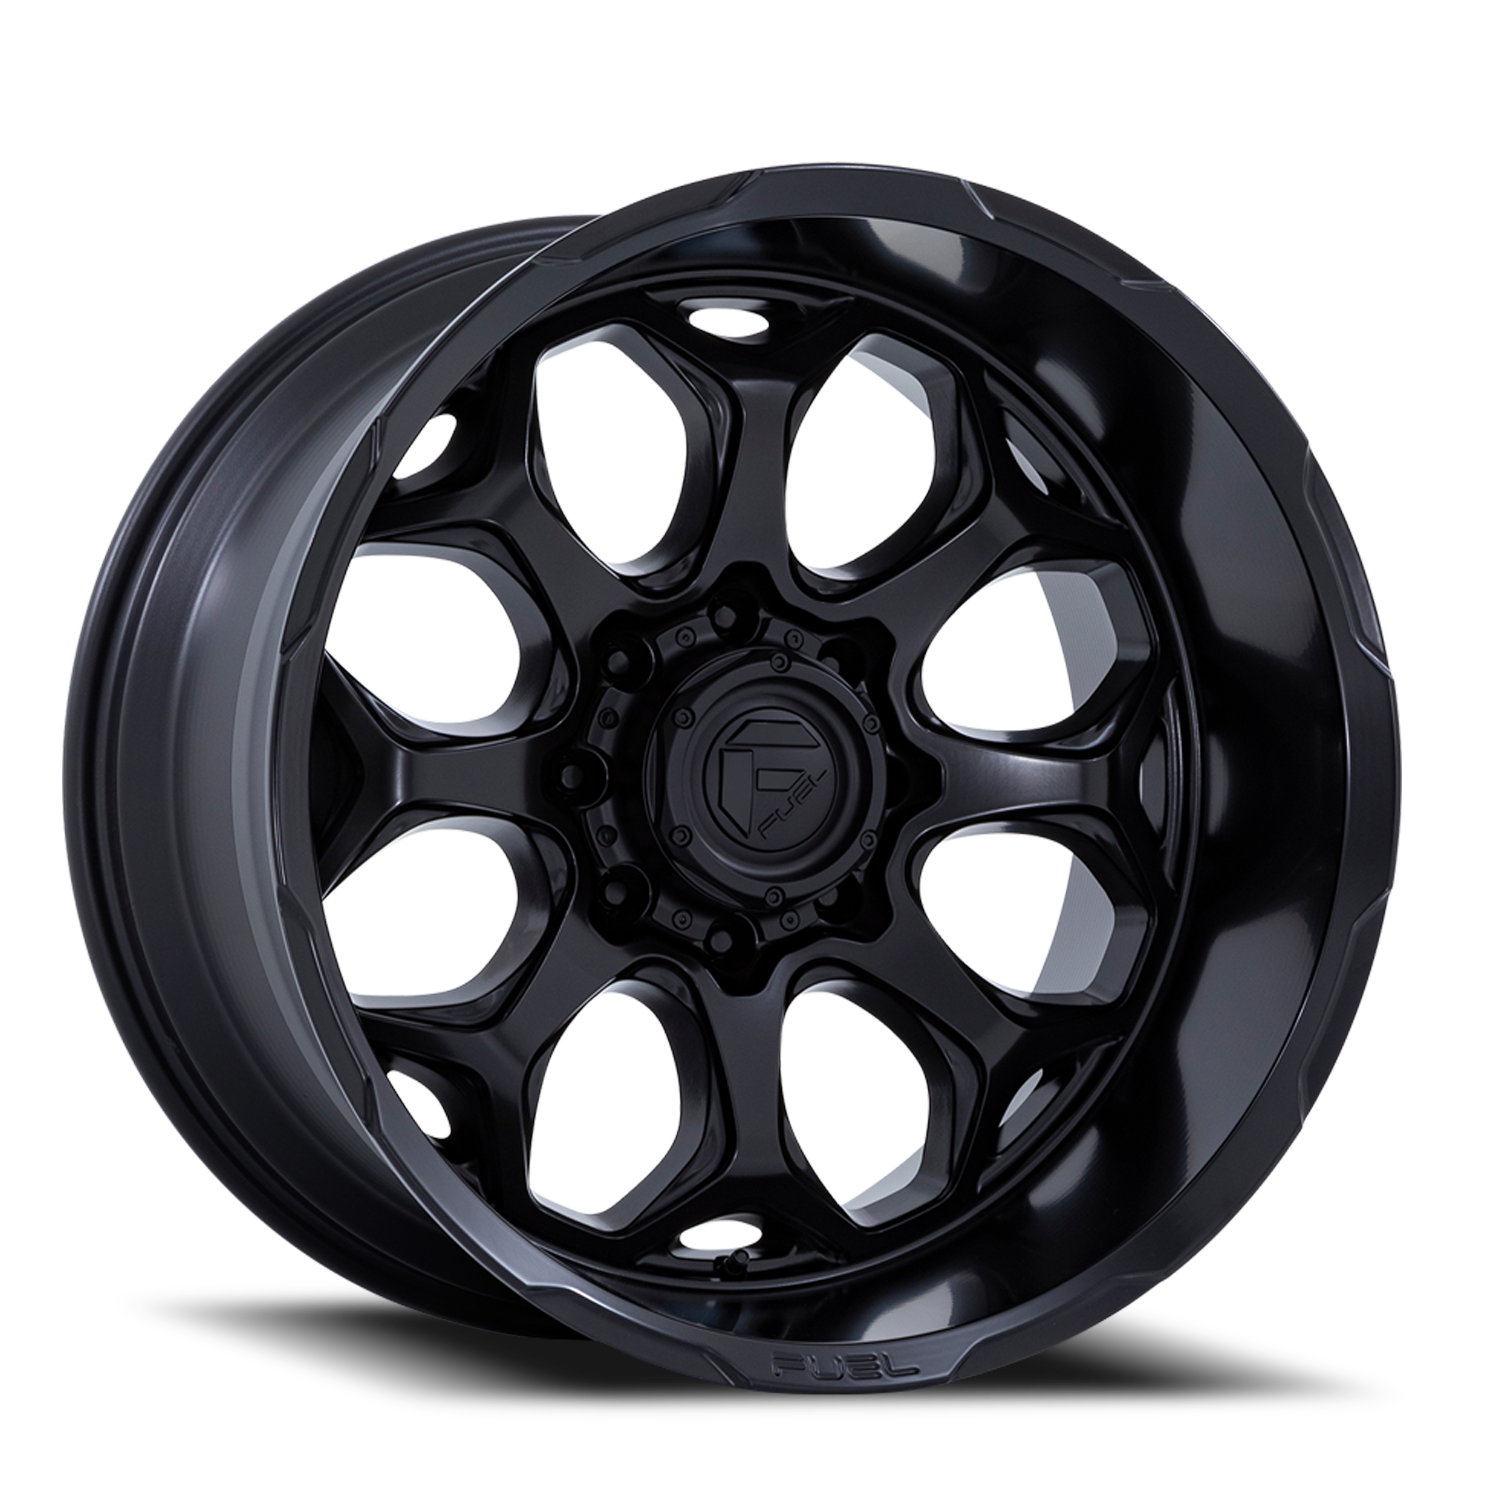 Aluminum Wheels 22X12 Scepter FC862 MX 5 On 127 Blackout 71.5 Bore -44 Offset Fuel Off Road Wheels